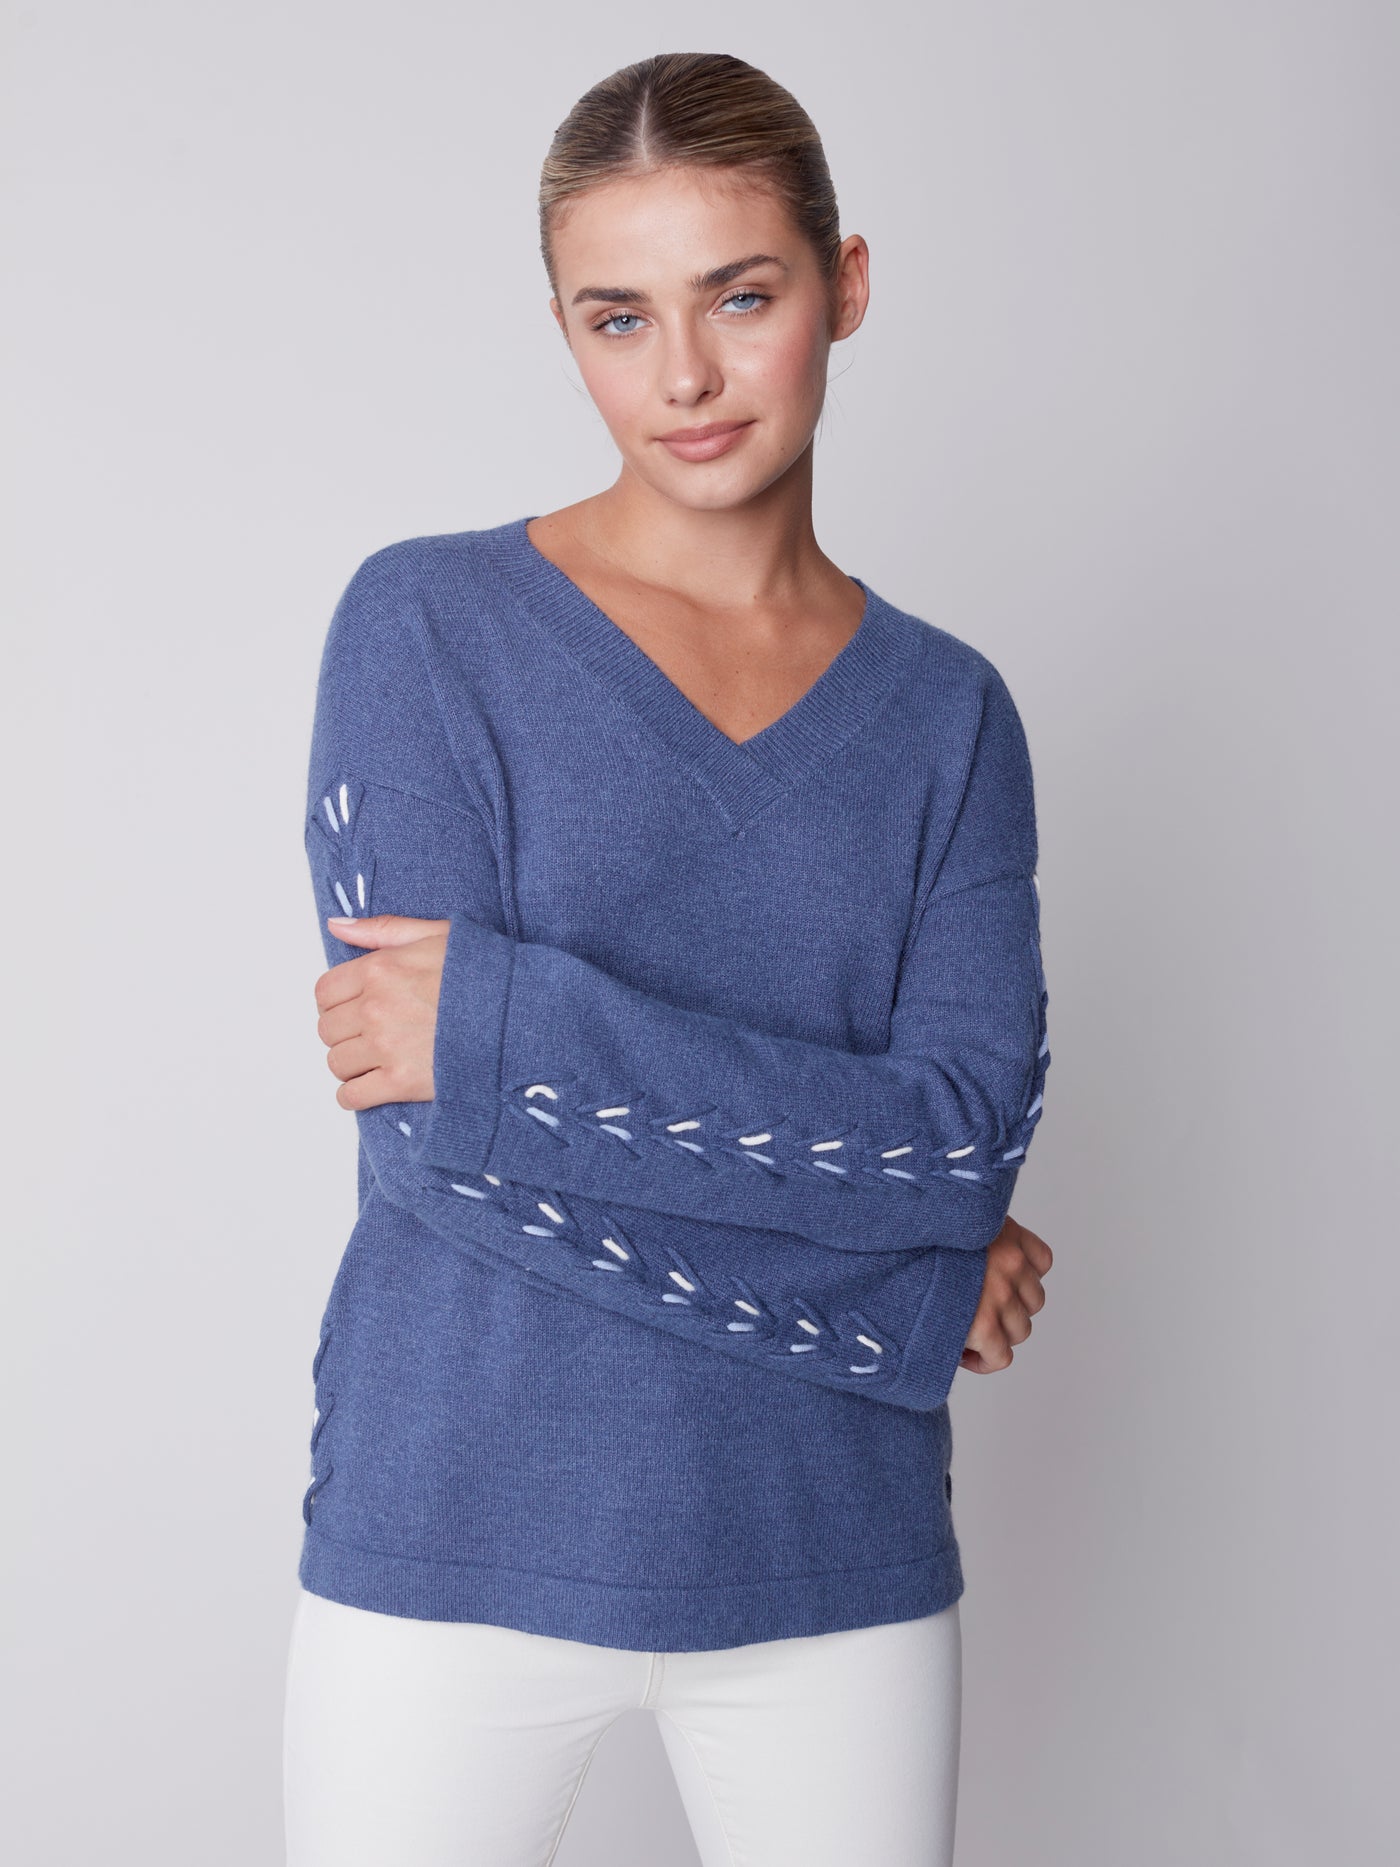 Charlie B Top - V-Neck Sweater - Denim